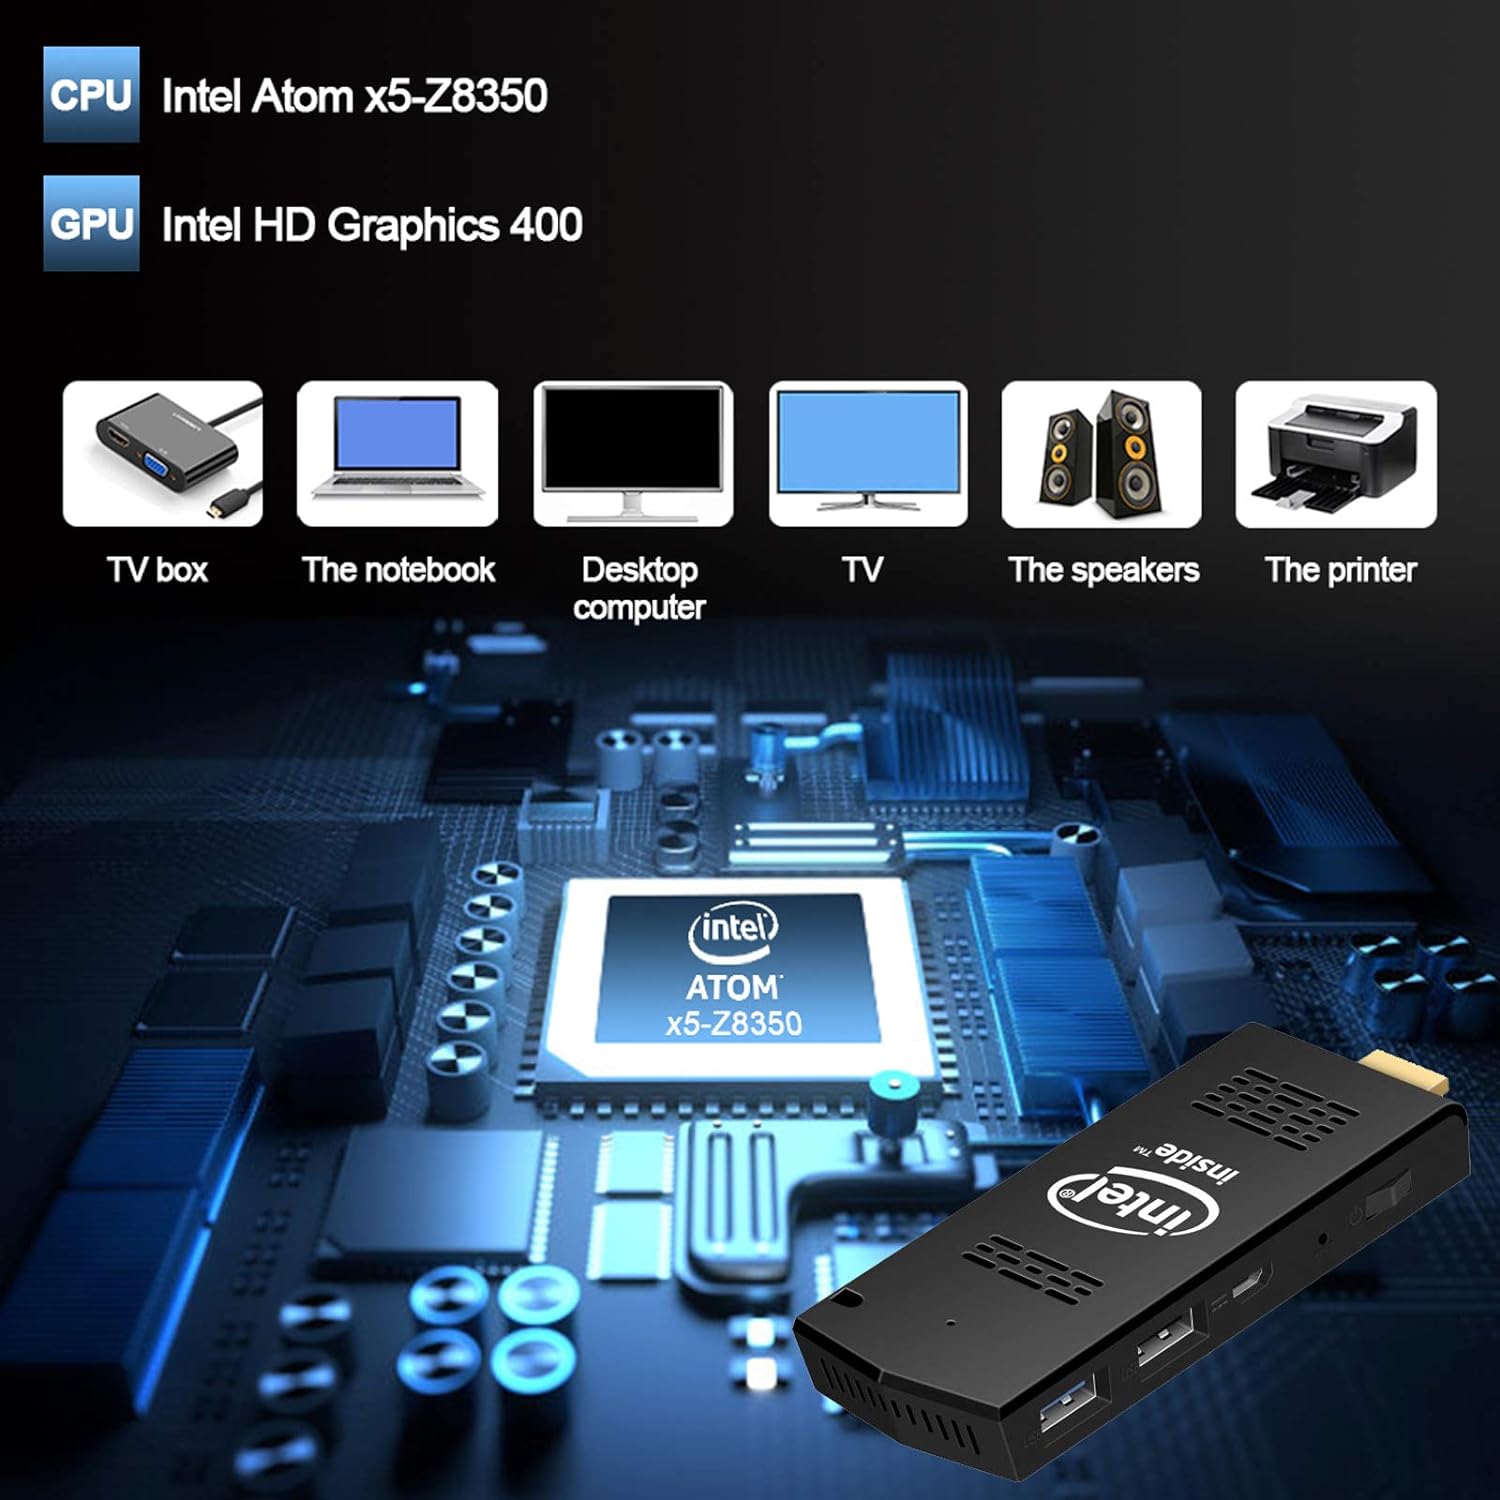 AKLWY Intel Compute Stick Mini PC Stick 8GB RAM 128GB ROM with Intel Atom Z8350  Windows 10 Pro Support Auto-On After Power Failure,Support 4K HD,Dual Band WiFi 2.4G/5G, BT 4.2